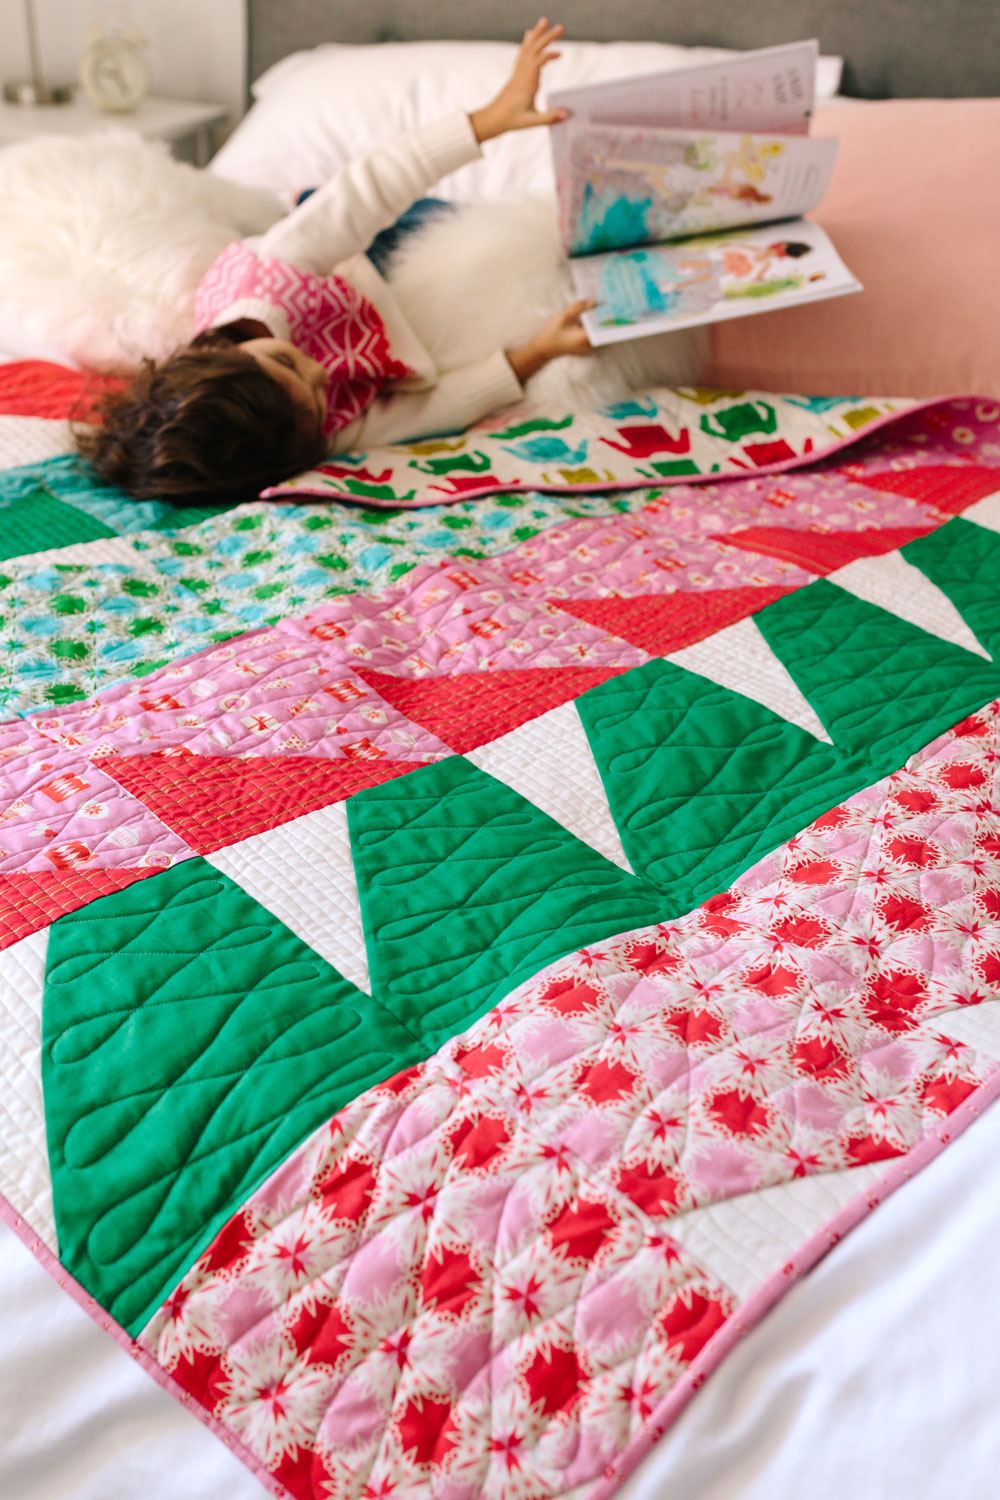 Bayside Christmas Quilt, a Fast Finish Holiday Quilt | Suzy Quilts https://suzyquilts.com/holiday-quilt-christmas-bayside